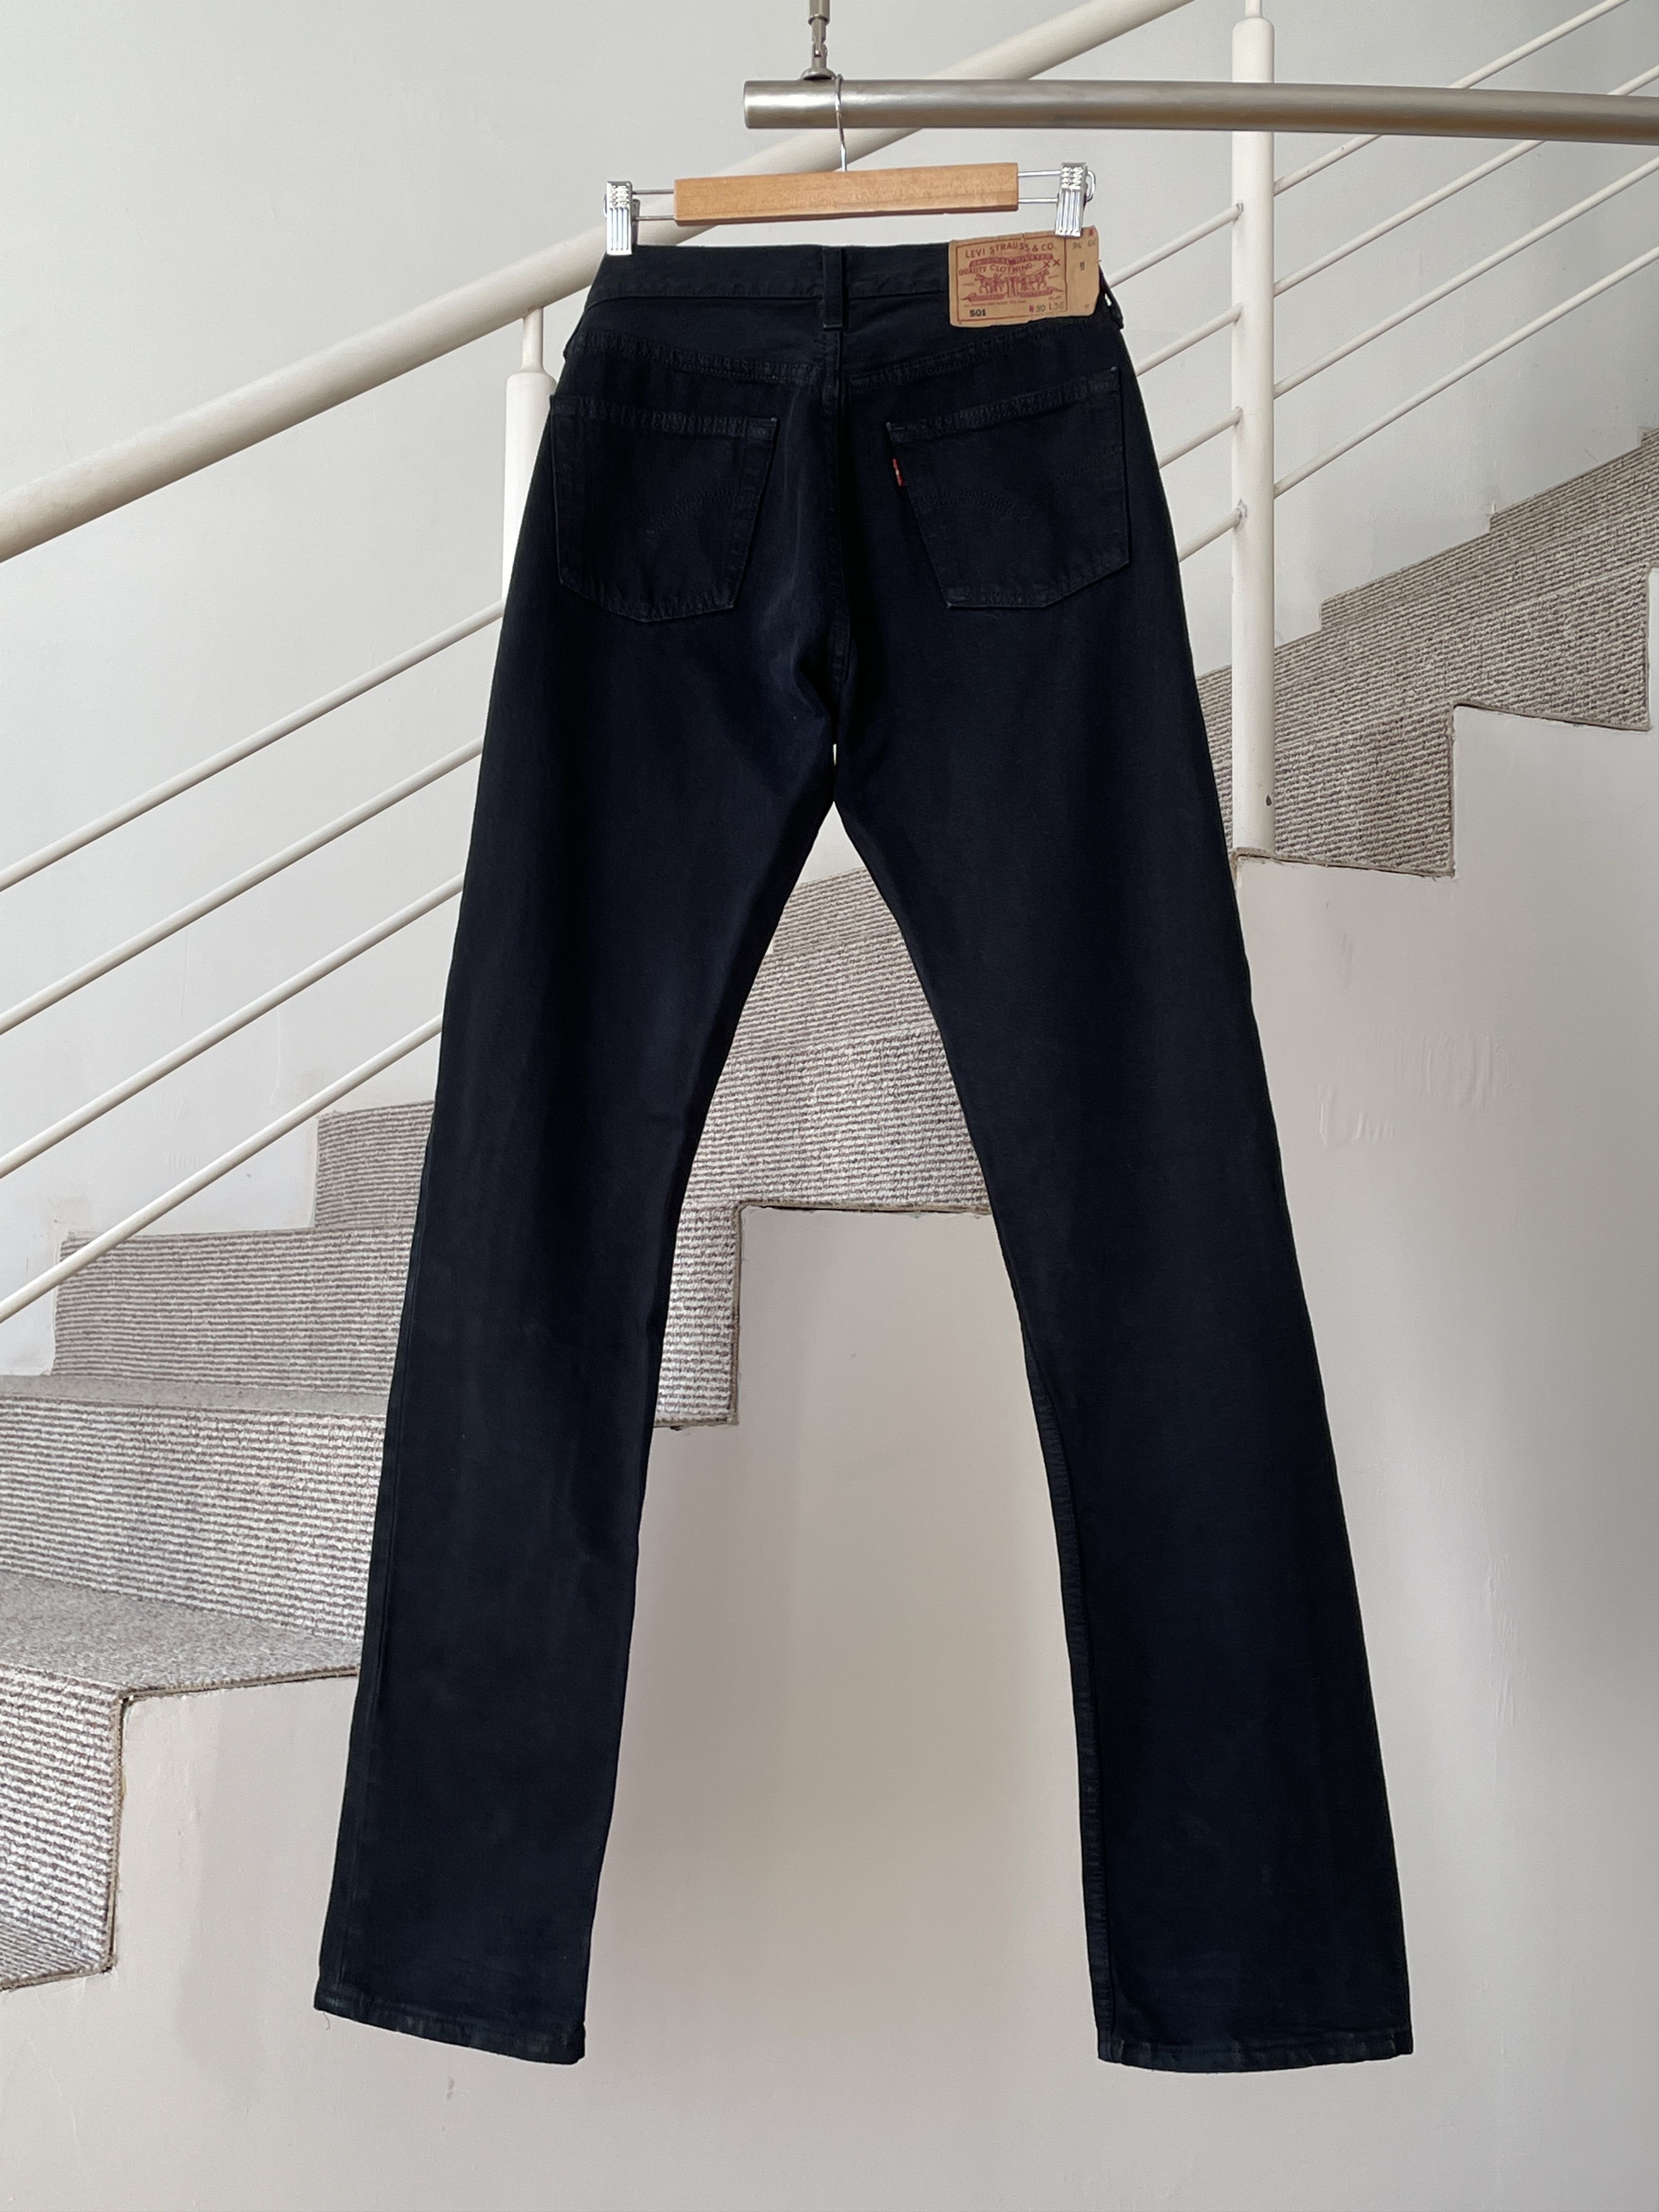 Vintage LEVIS 501 Jeans Vintage Black Denim 90s A7314 | Grailed